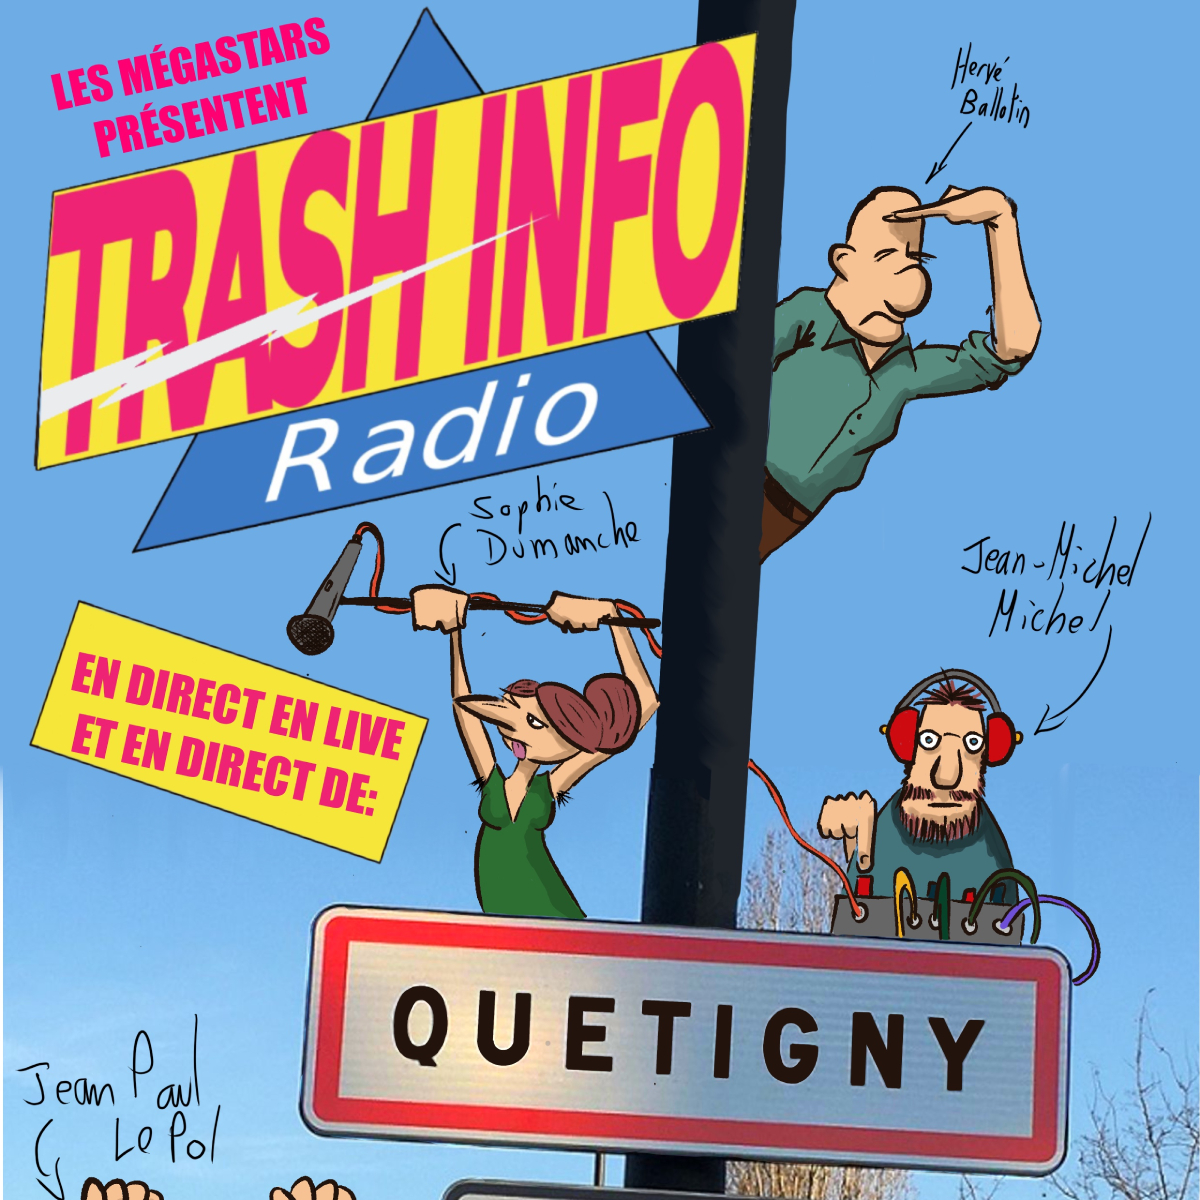 Trash info radio